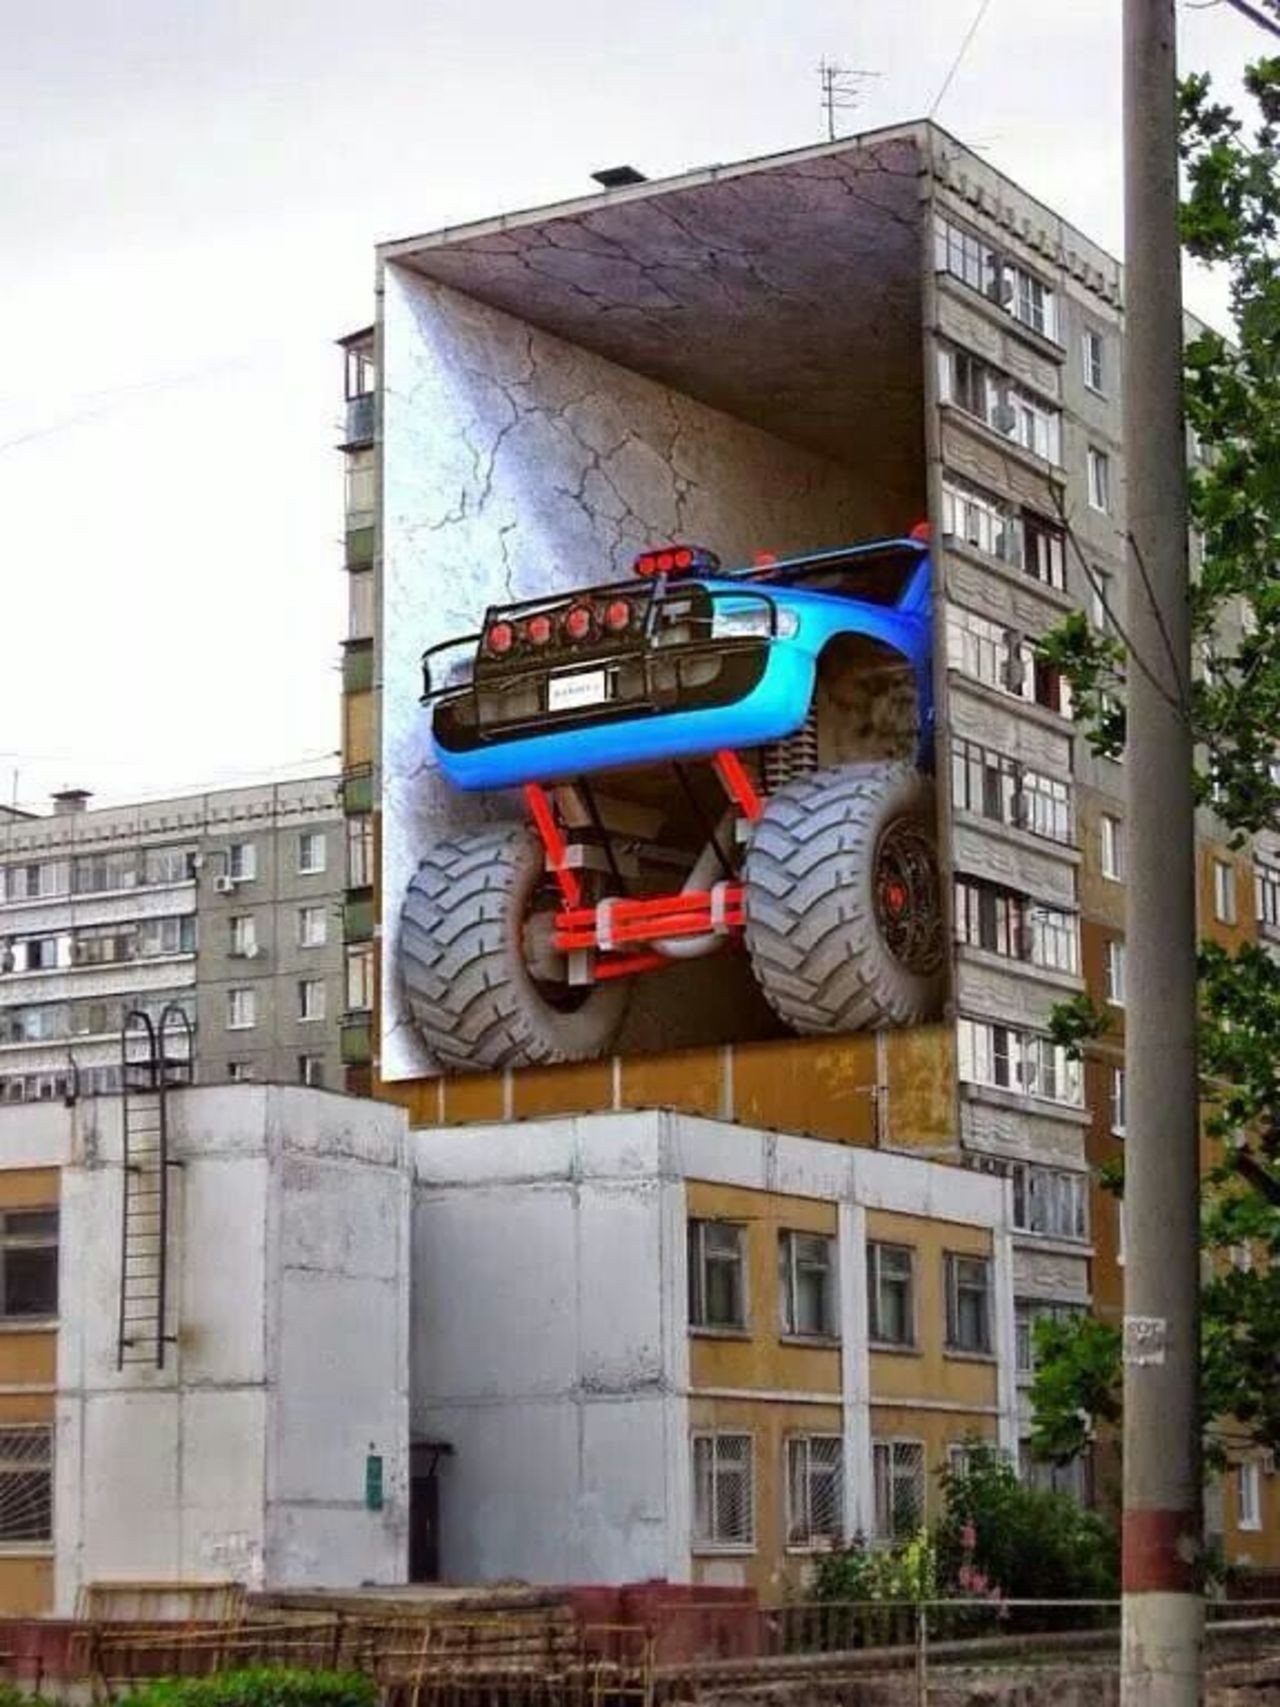 StreetArt from around the World
#StreetArt #art #UrbanArt http://t.co/qetY73DiRU